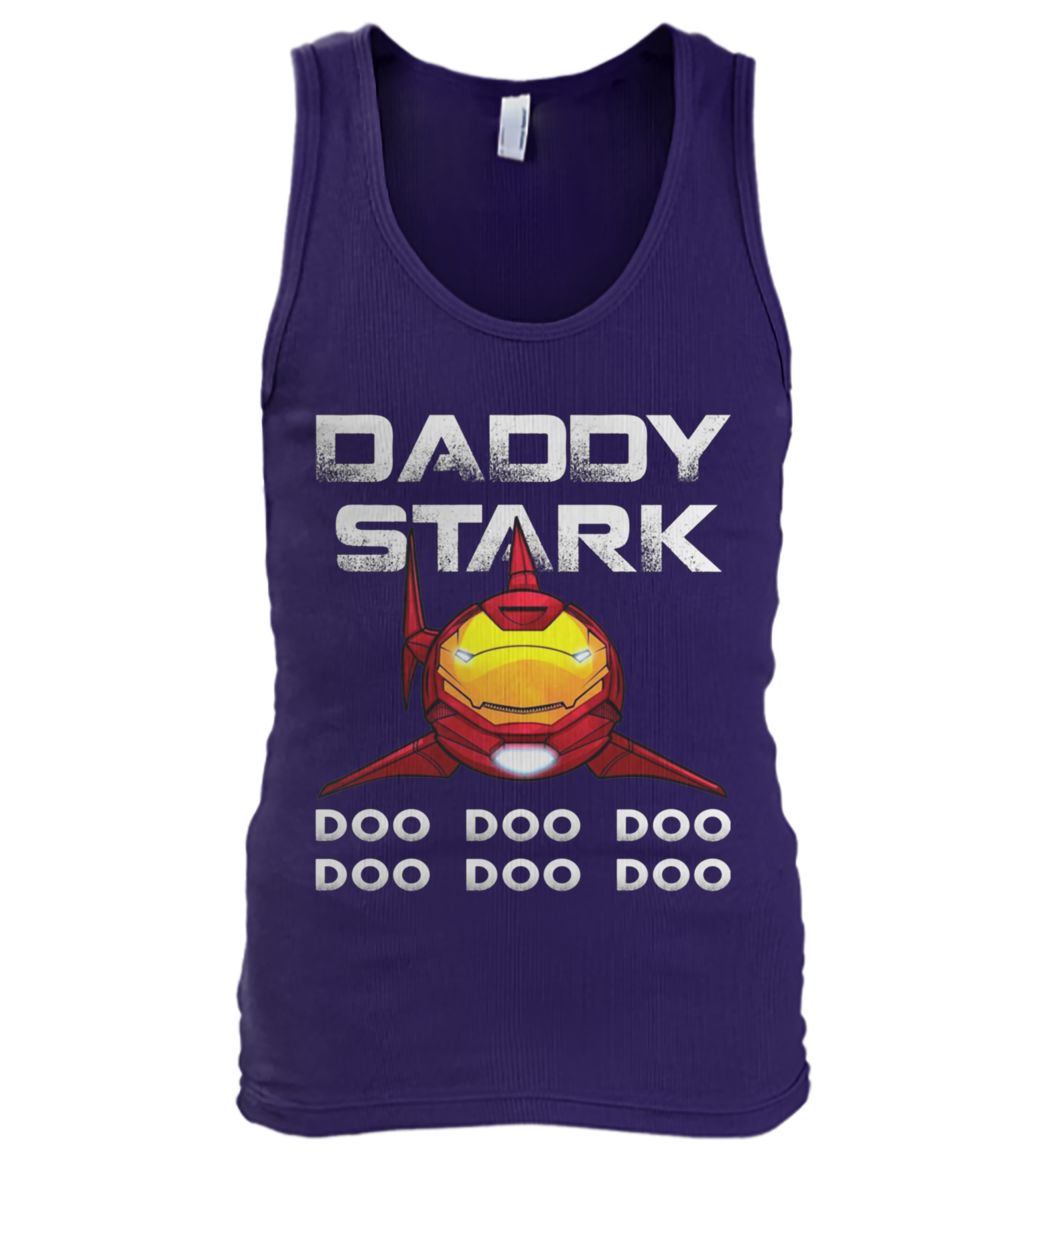 Iron shark daddy stark doo doo doo doo men's tank top